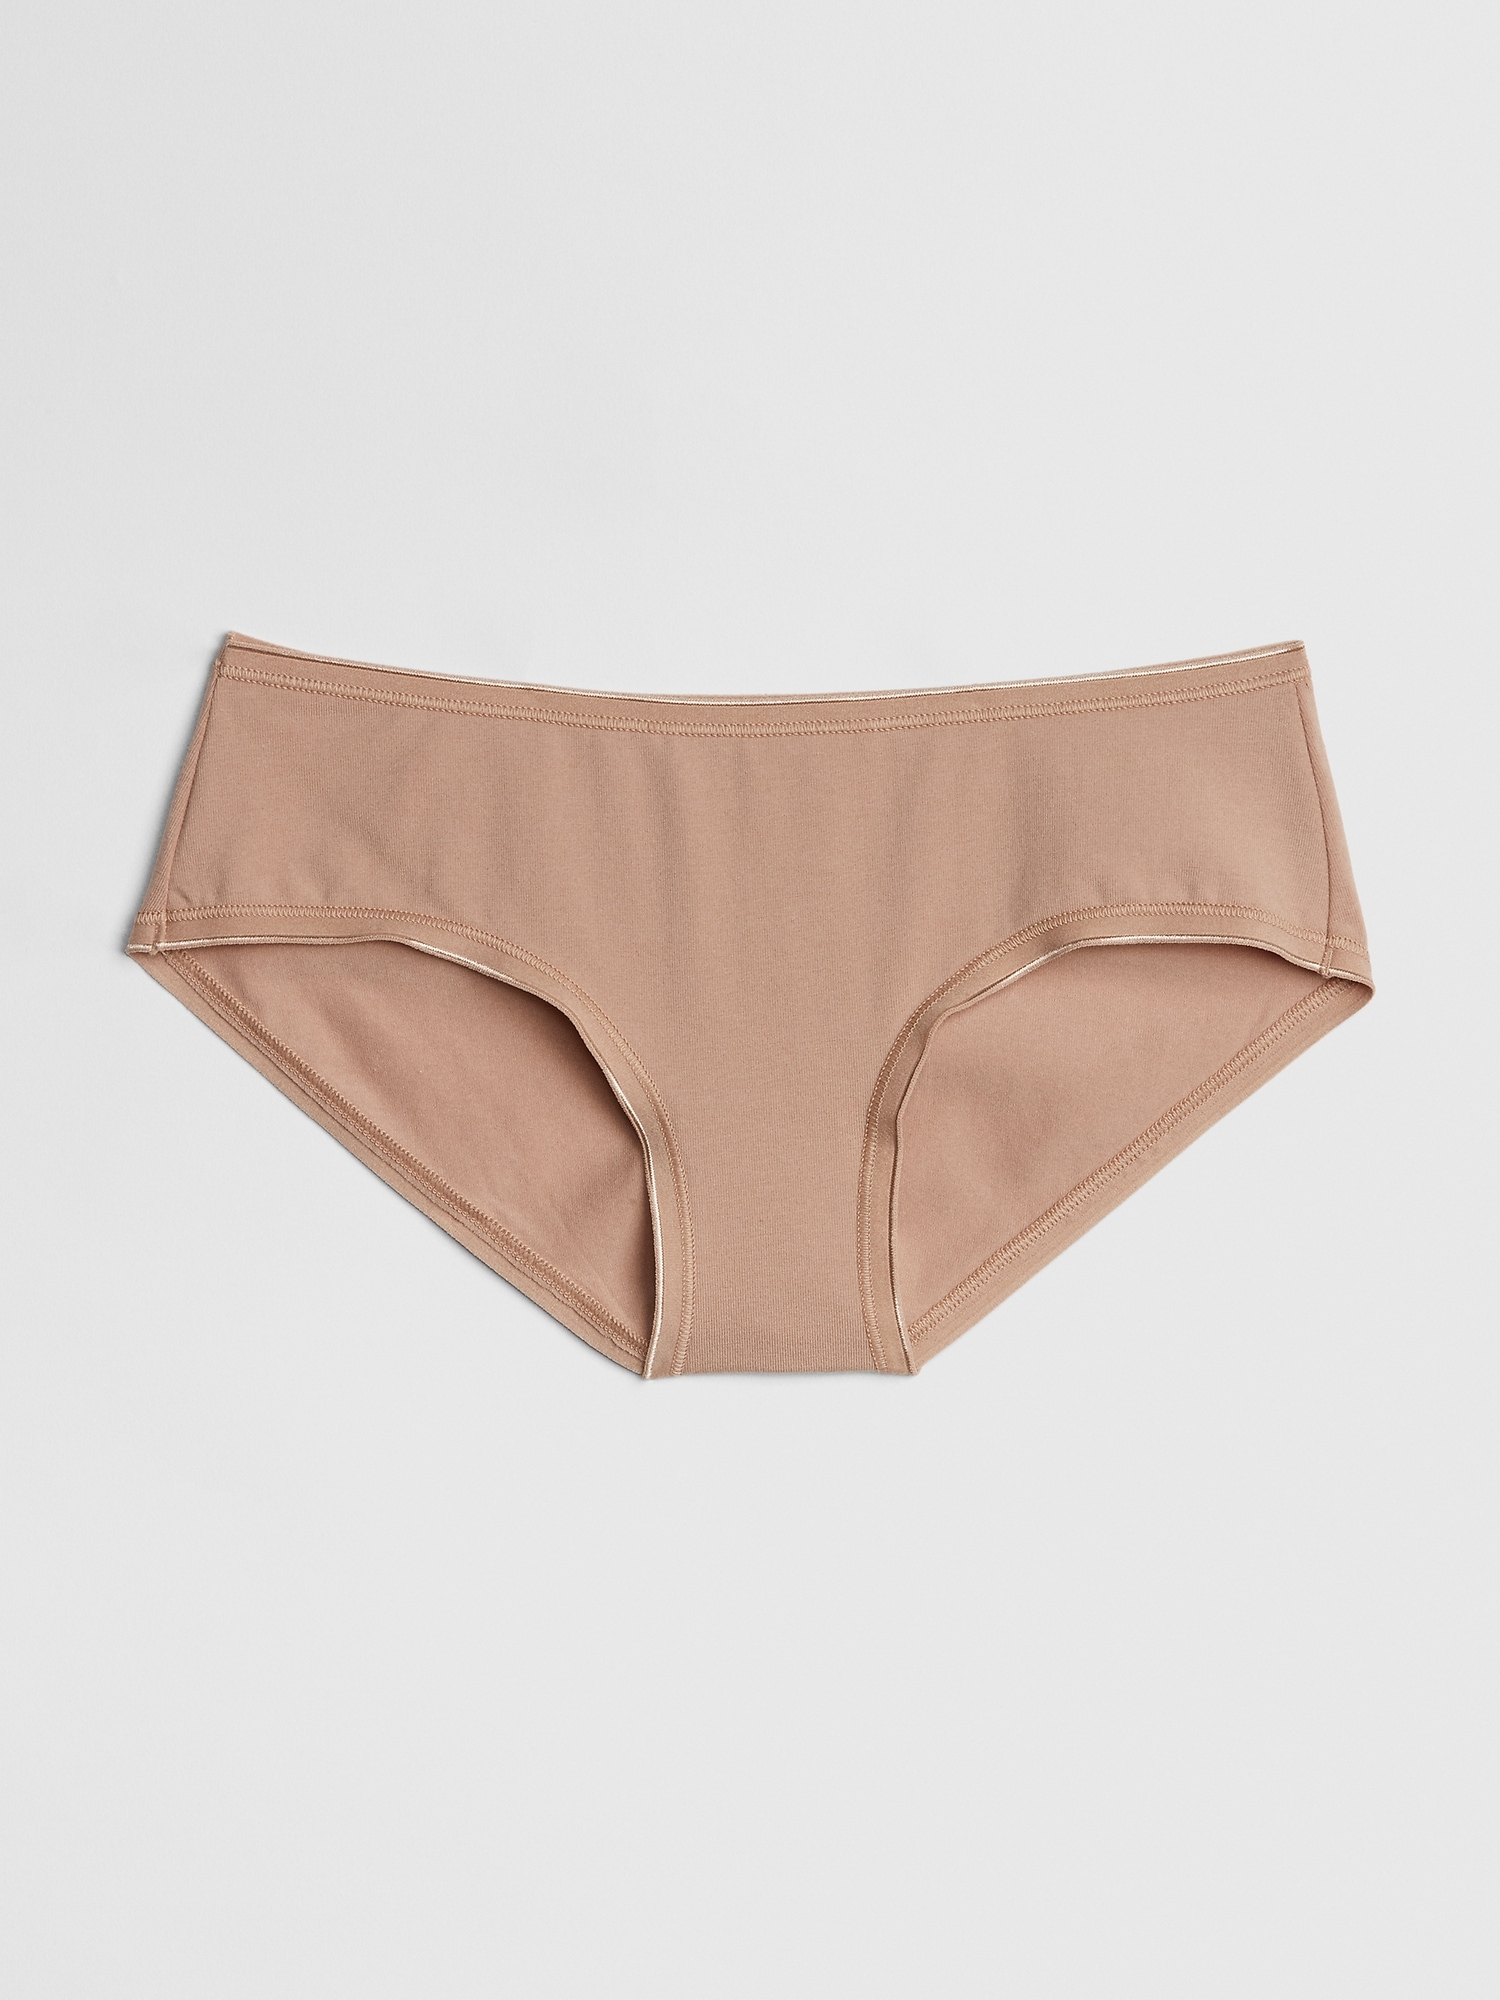 Cute Big Girls' Underwear, Cotton Briefs Panties Strech Comfy For